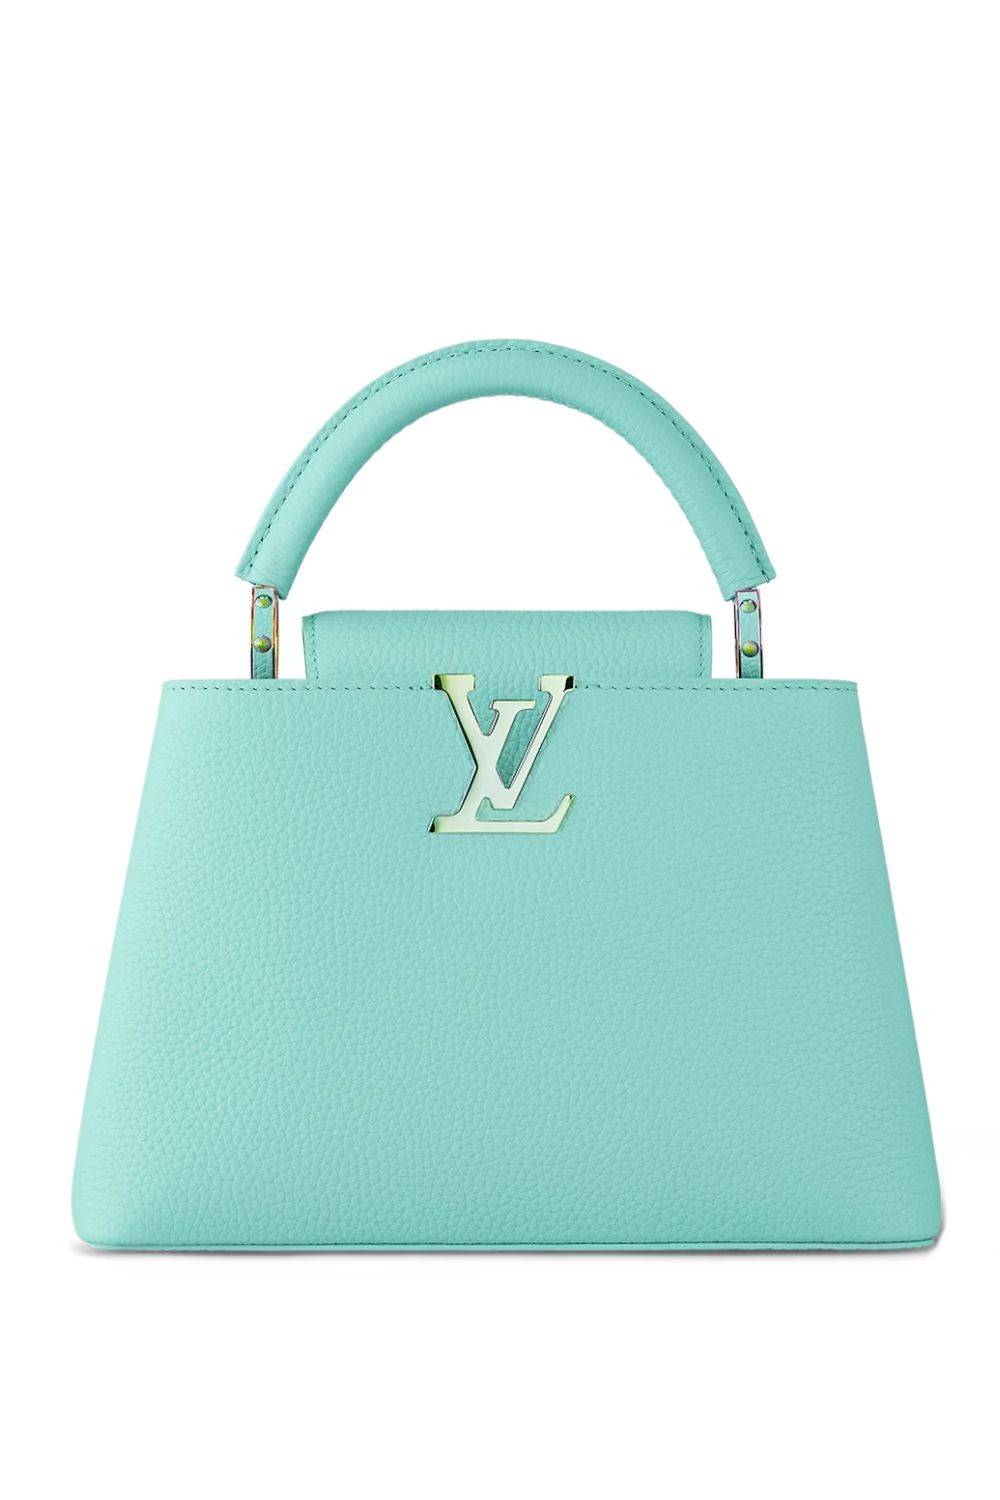 Louis-Vuitton-Capucine-Bag